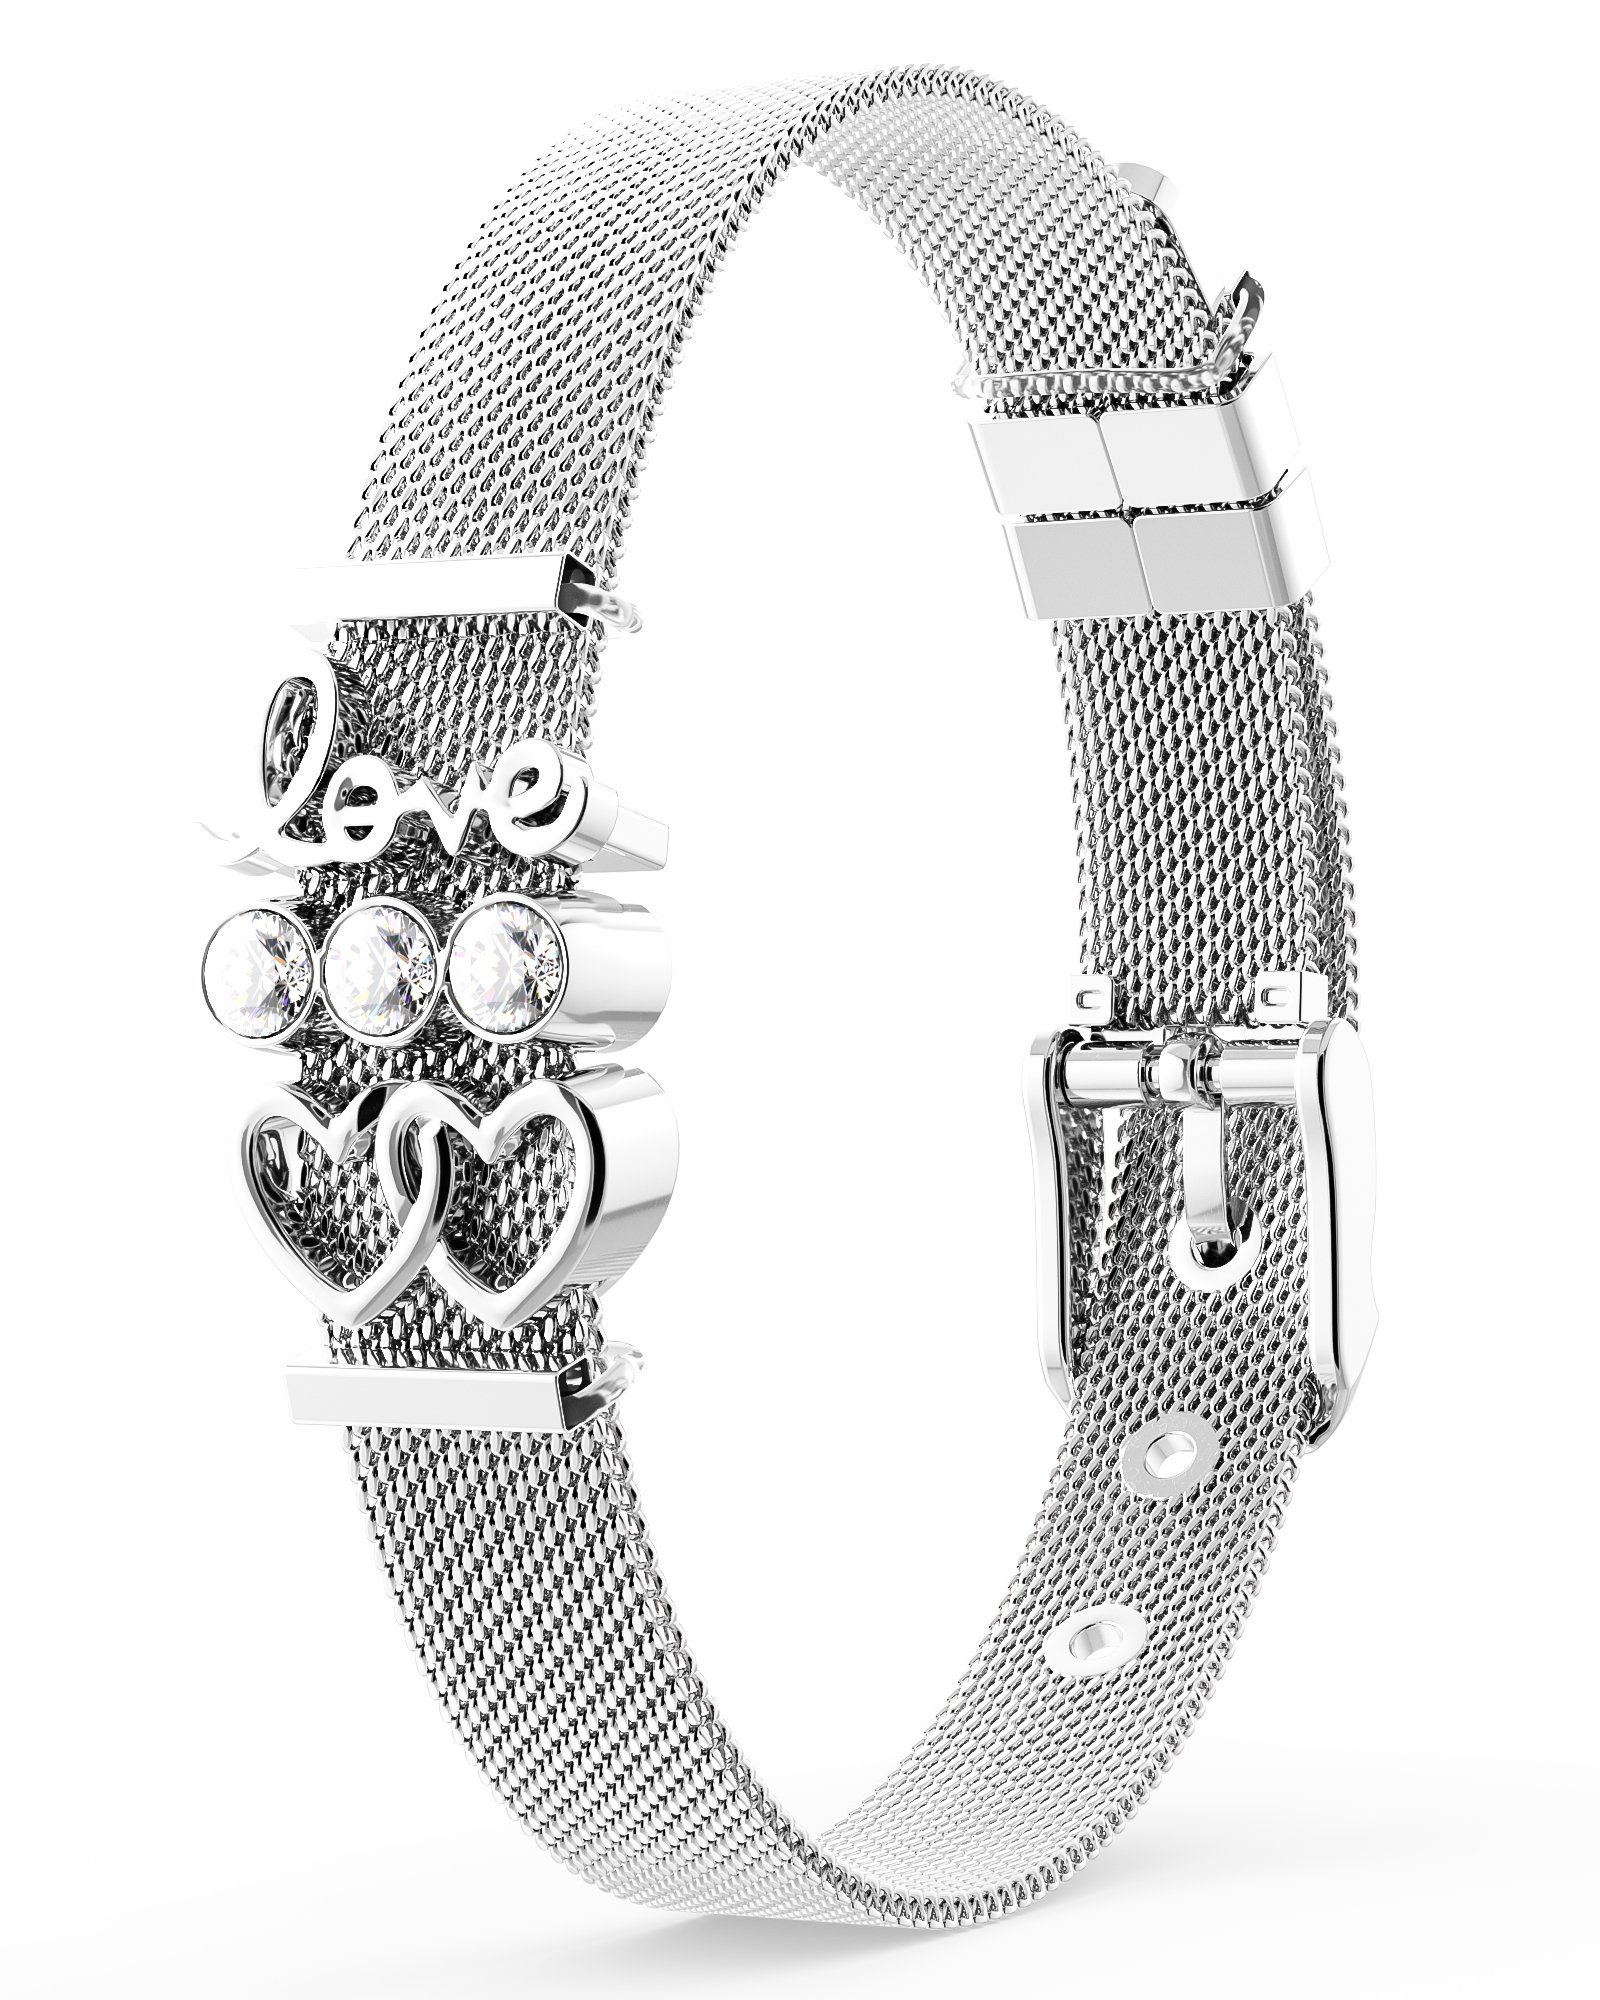 THIORA Charm-Armband Set Charmband Collection (Mesh Armband mit Charms, inkl. der im Hauptbild gezeigten Charms), Armband Set mit Anhängern Silber